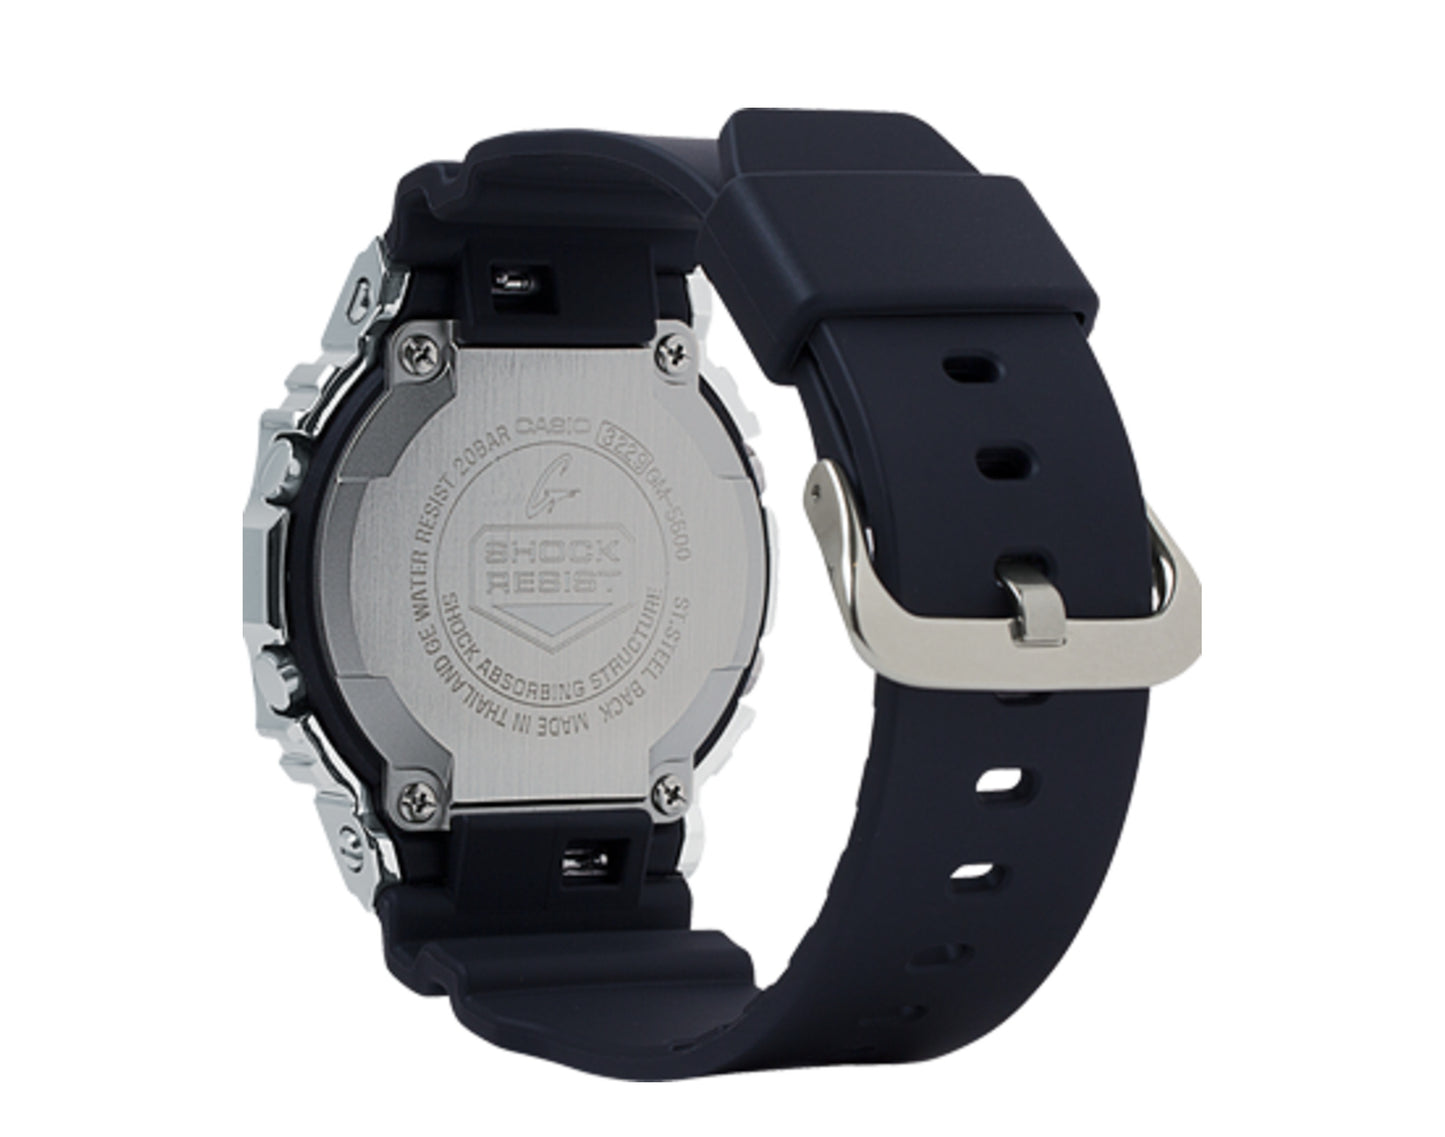 Casio G-Shock Digital Metal and Resin Silver/Black Men's Watch GM5600-1